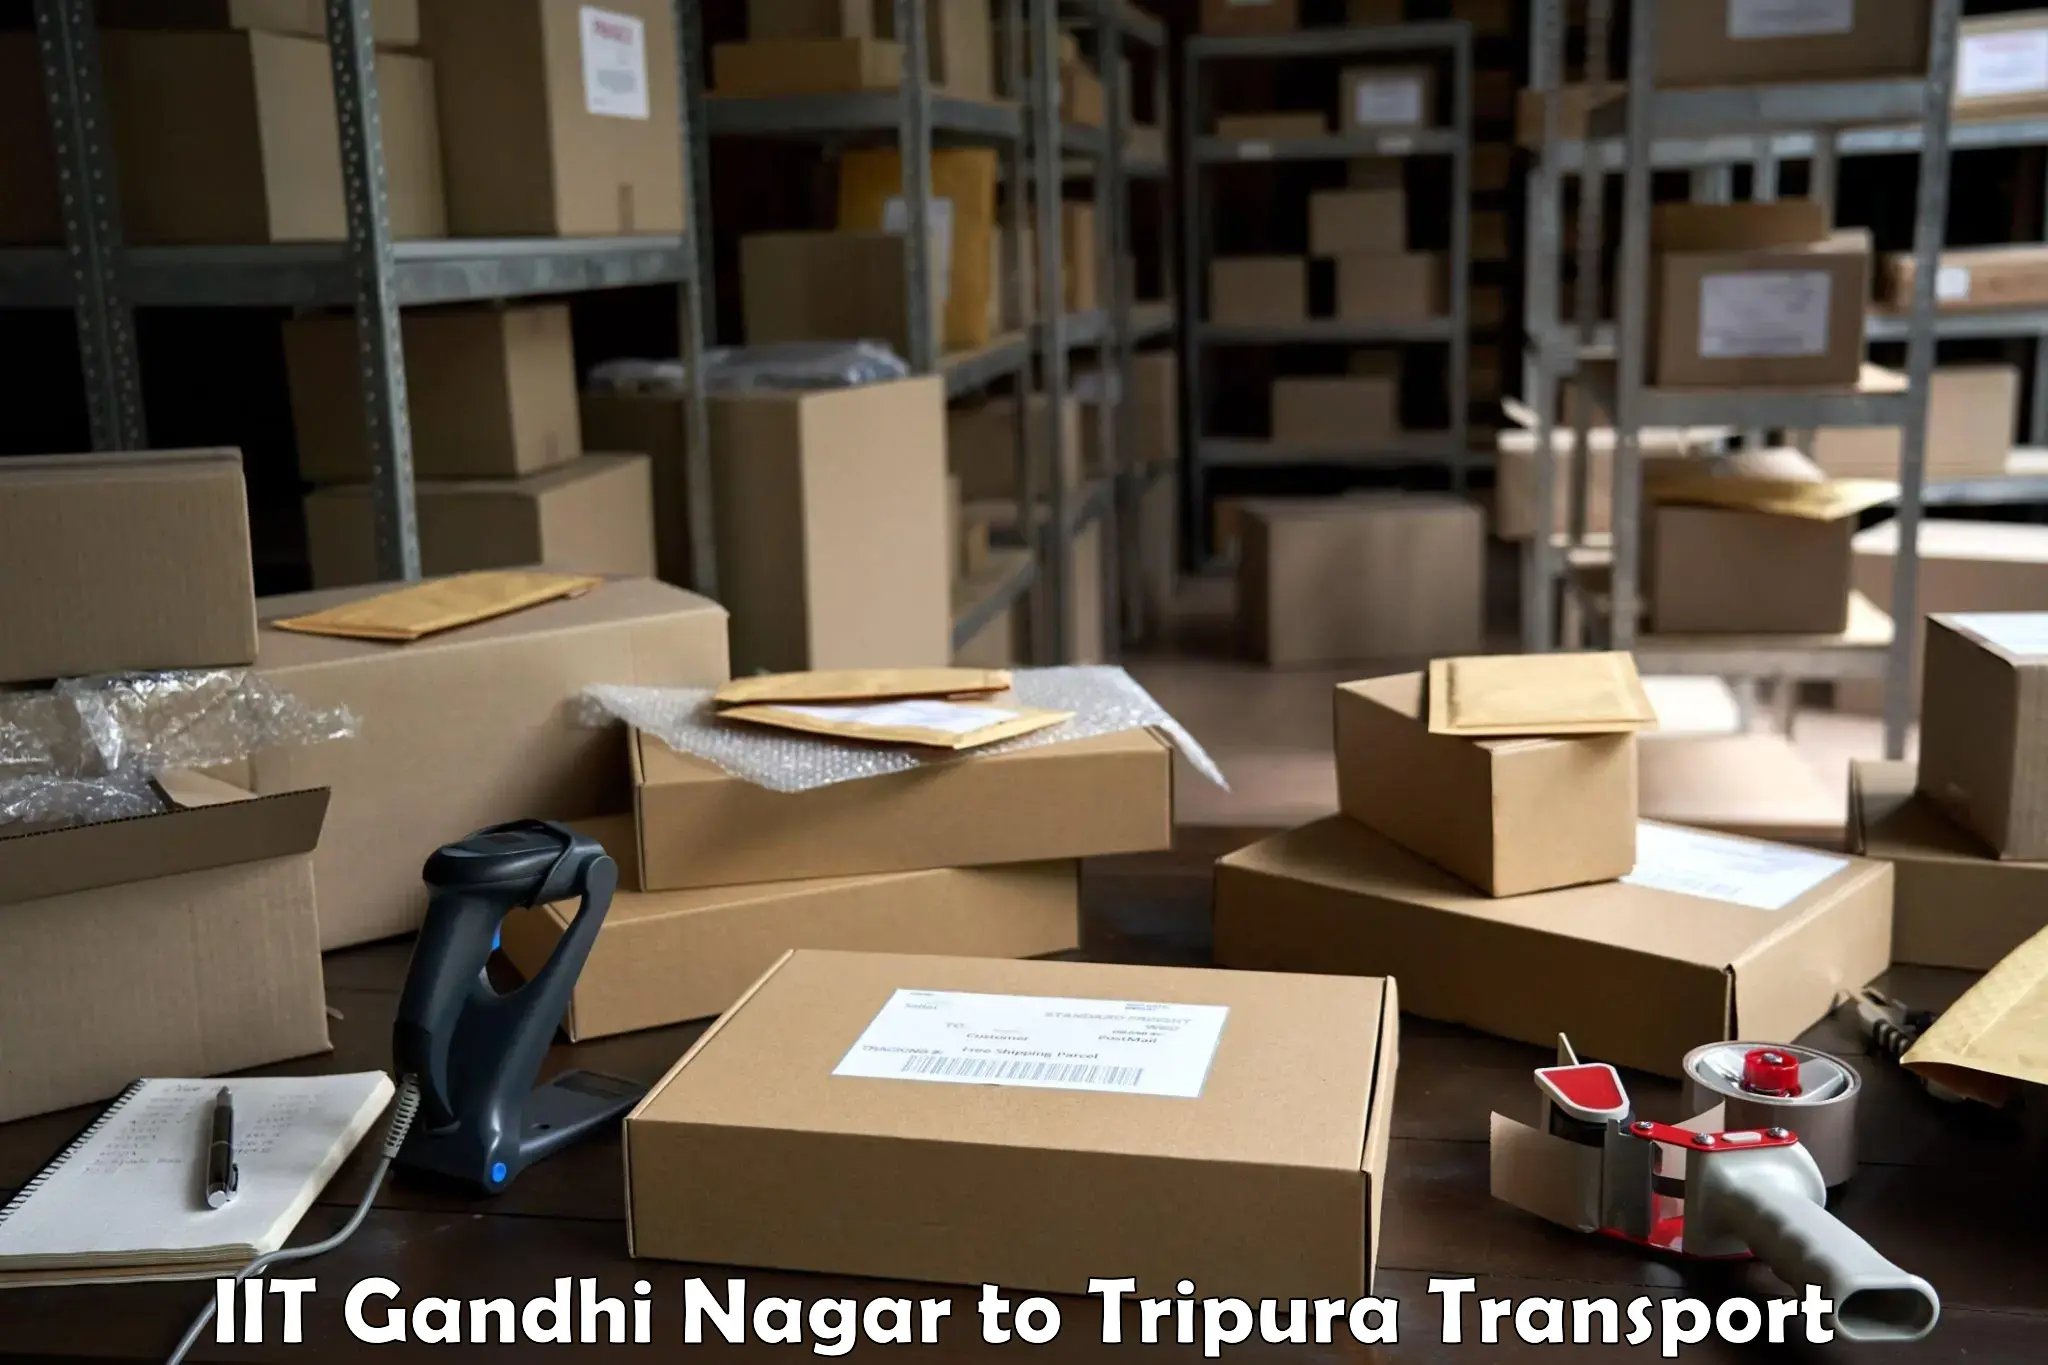 Sending bike to another city IIT Gandhi Nagar to Tripura